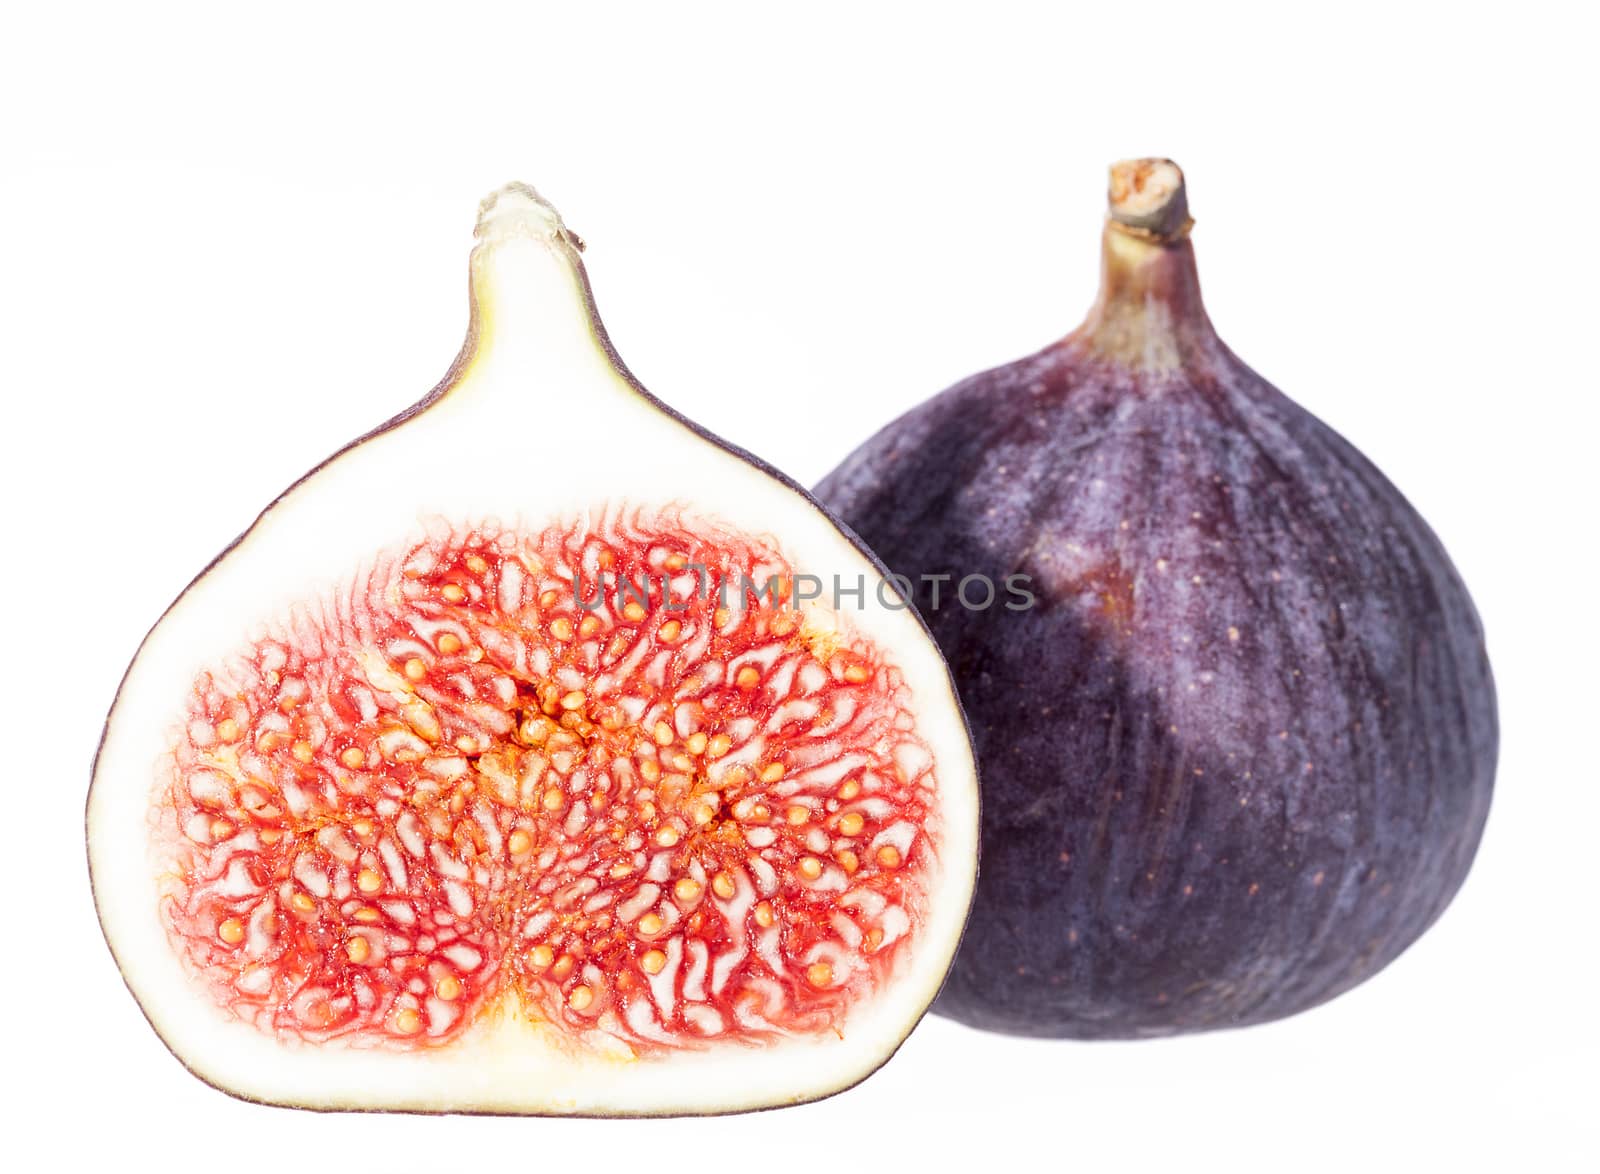 Fruits of fresh figs isolated on white background.